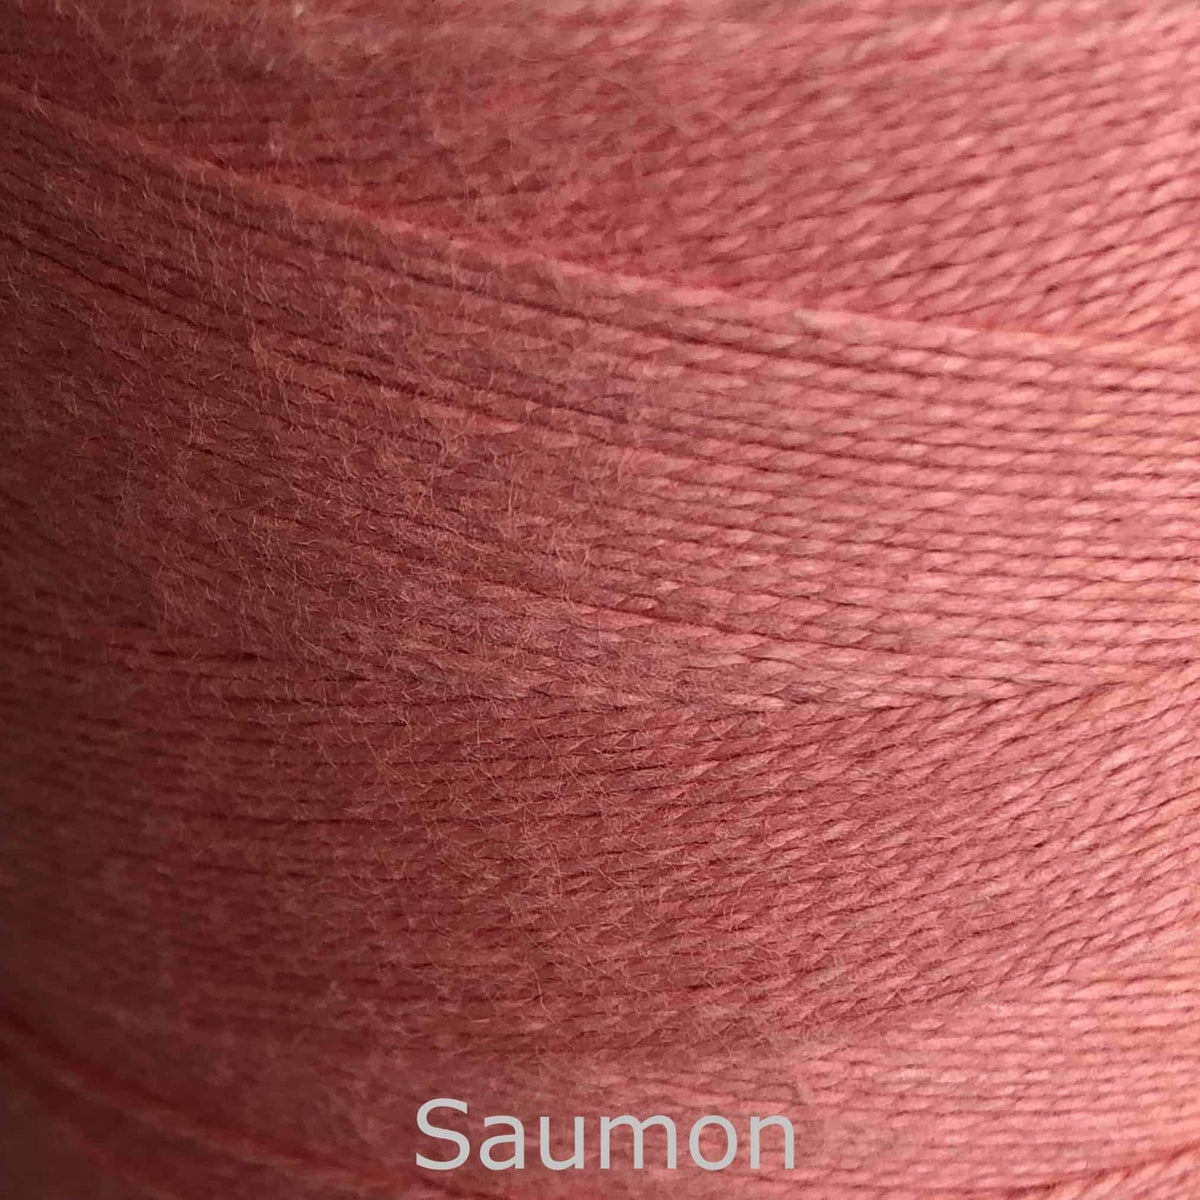 16/2 cotton weaving yarn saumon